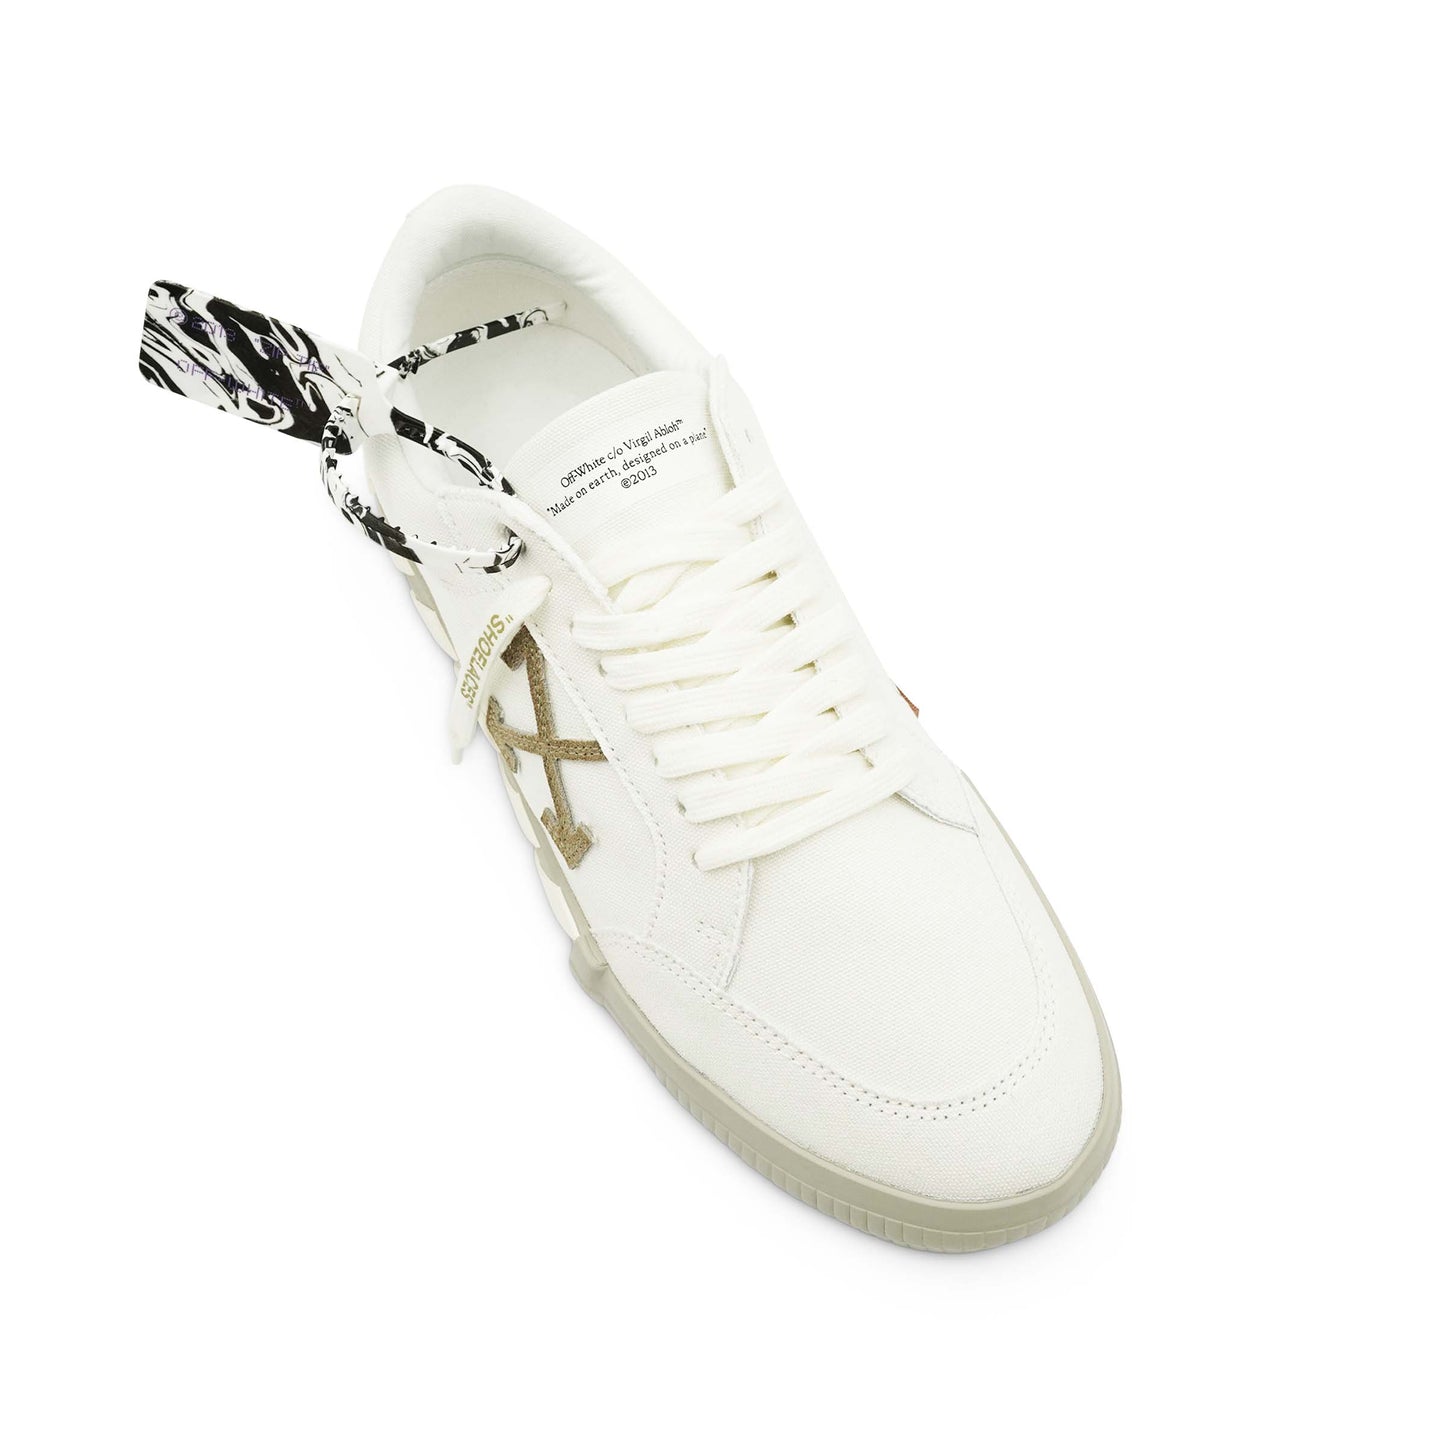 Low Vulcanized Eco Canvas Sneaker in Off White/Beige